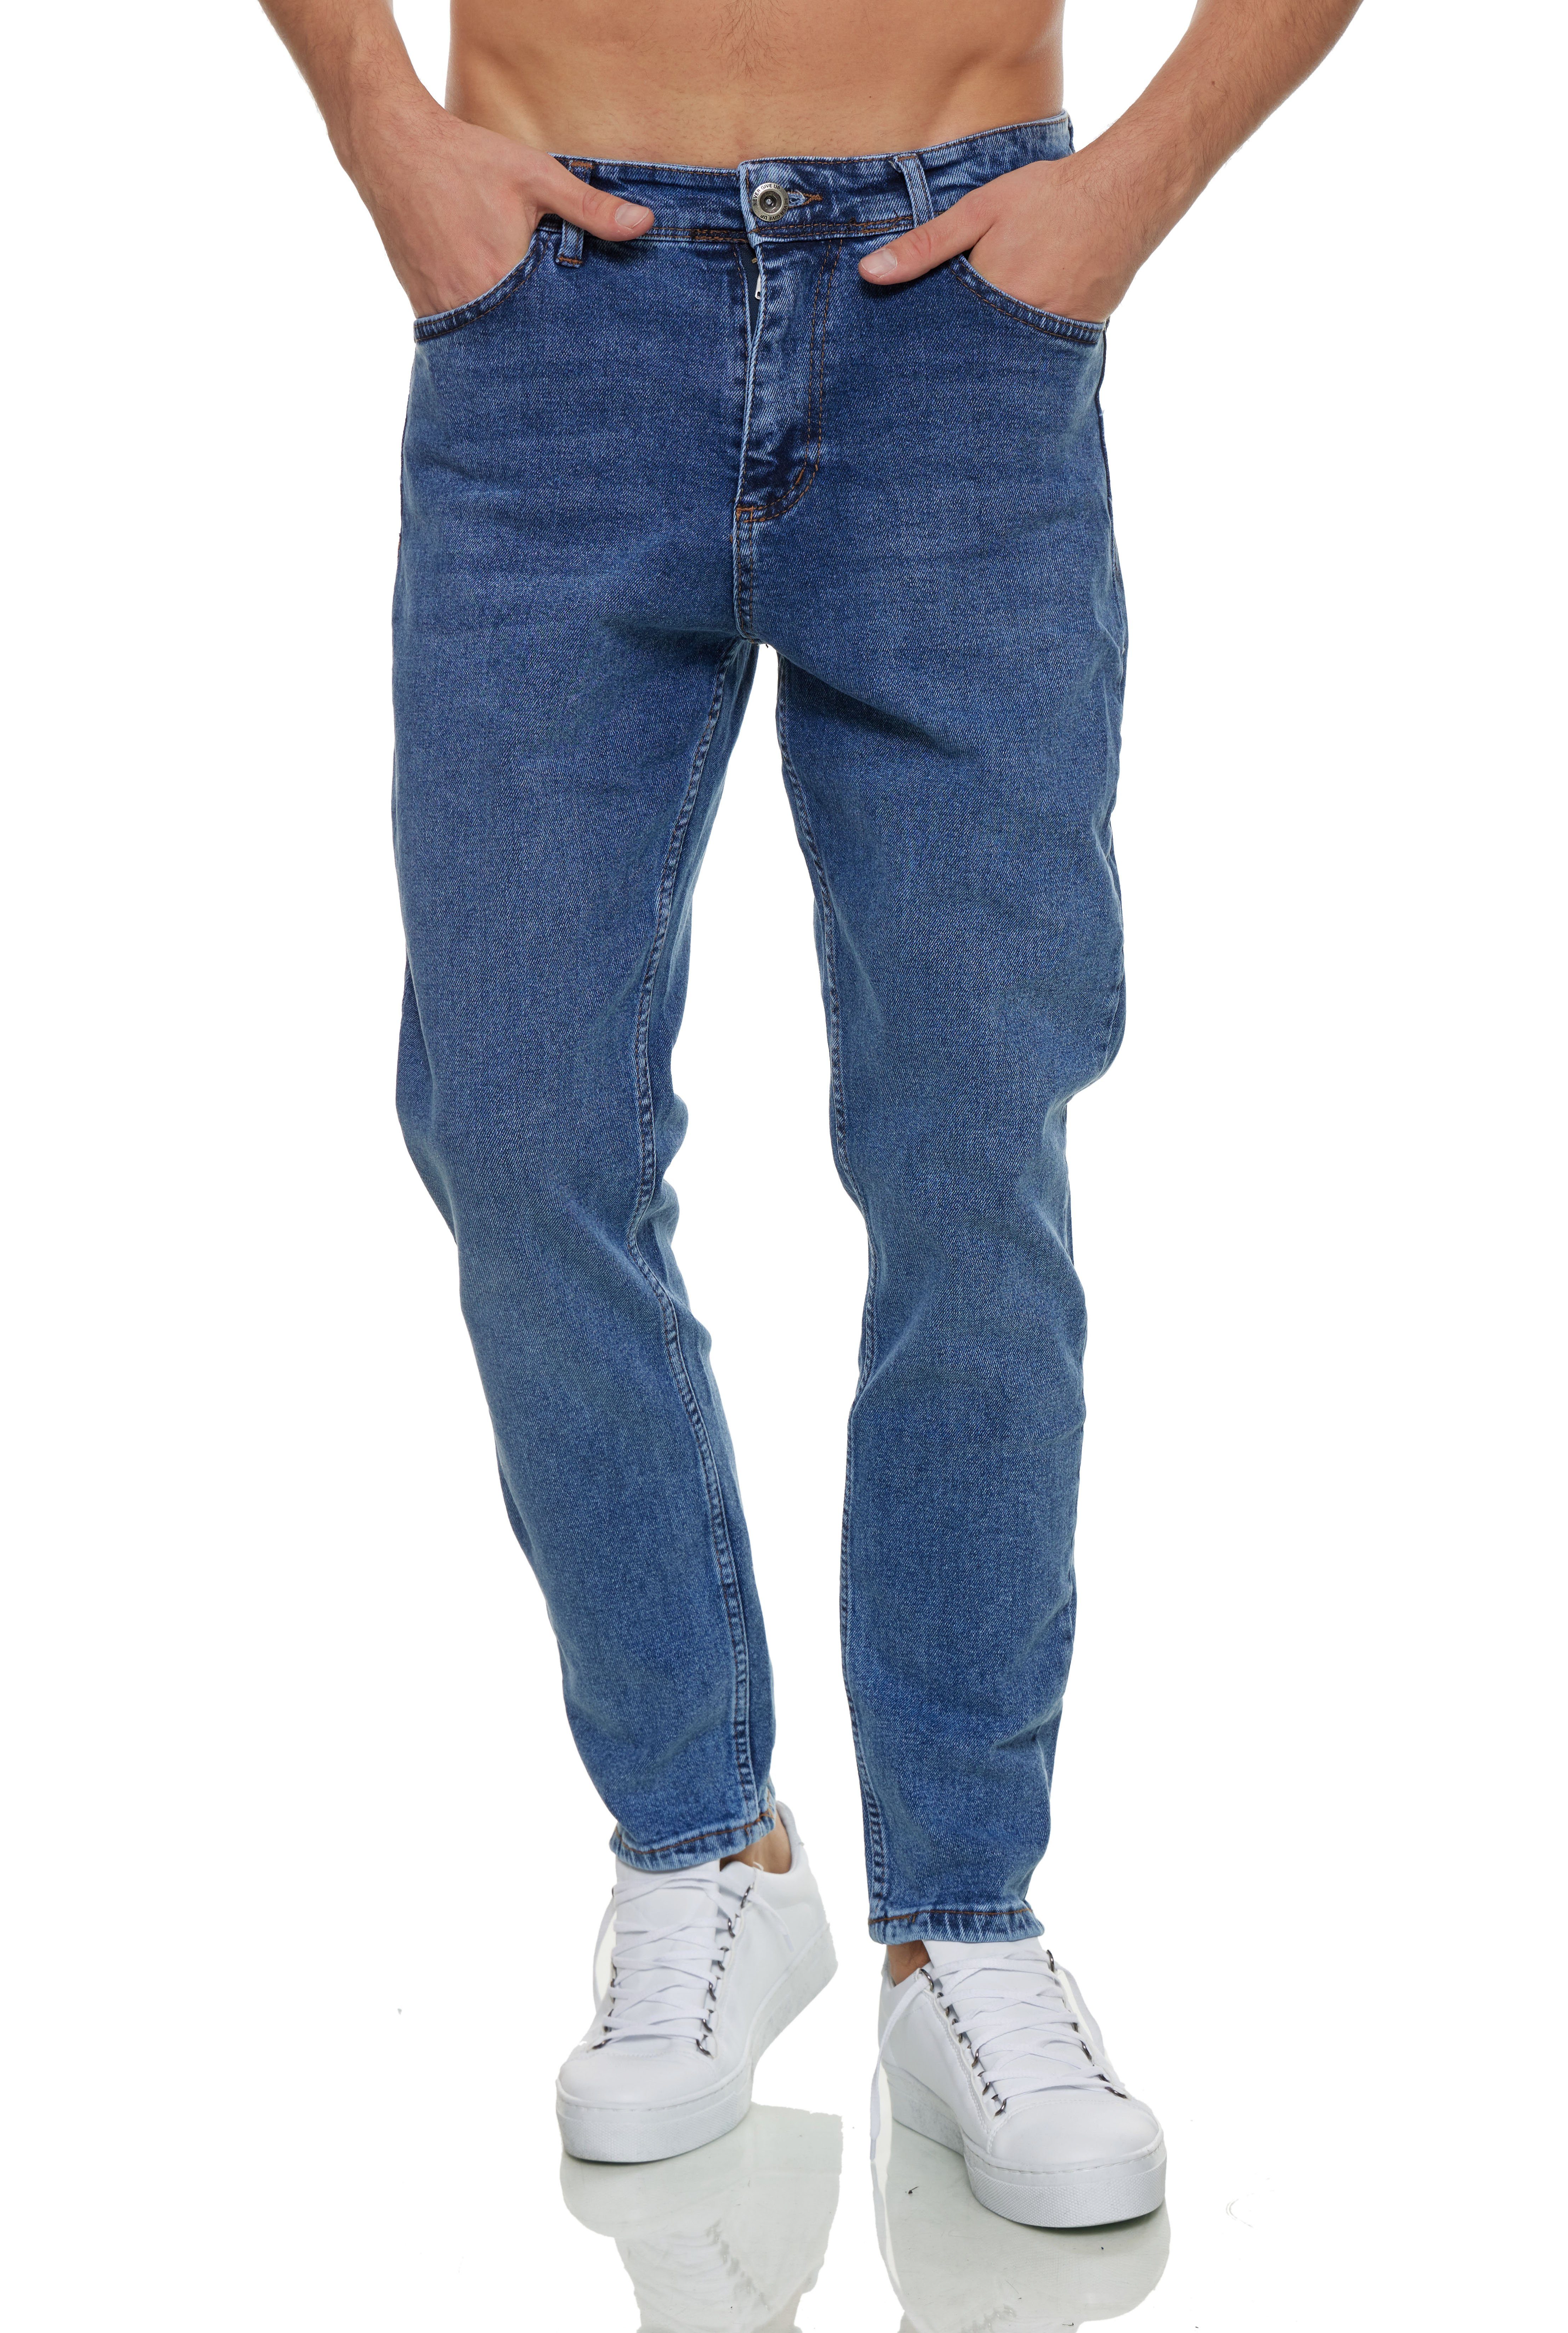 Denim House MOM-Fit Basic Jeans Stretchdenim Loose-fit-Jeans Herren einfarbig